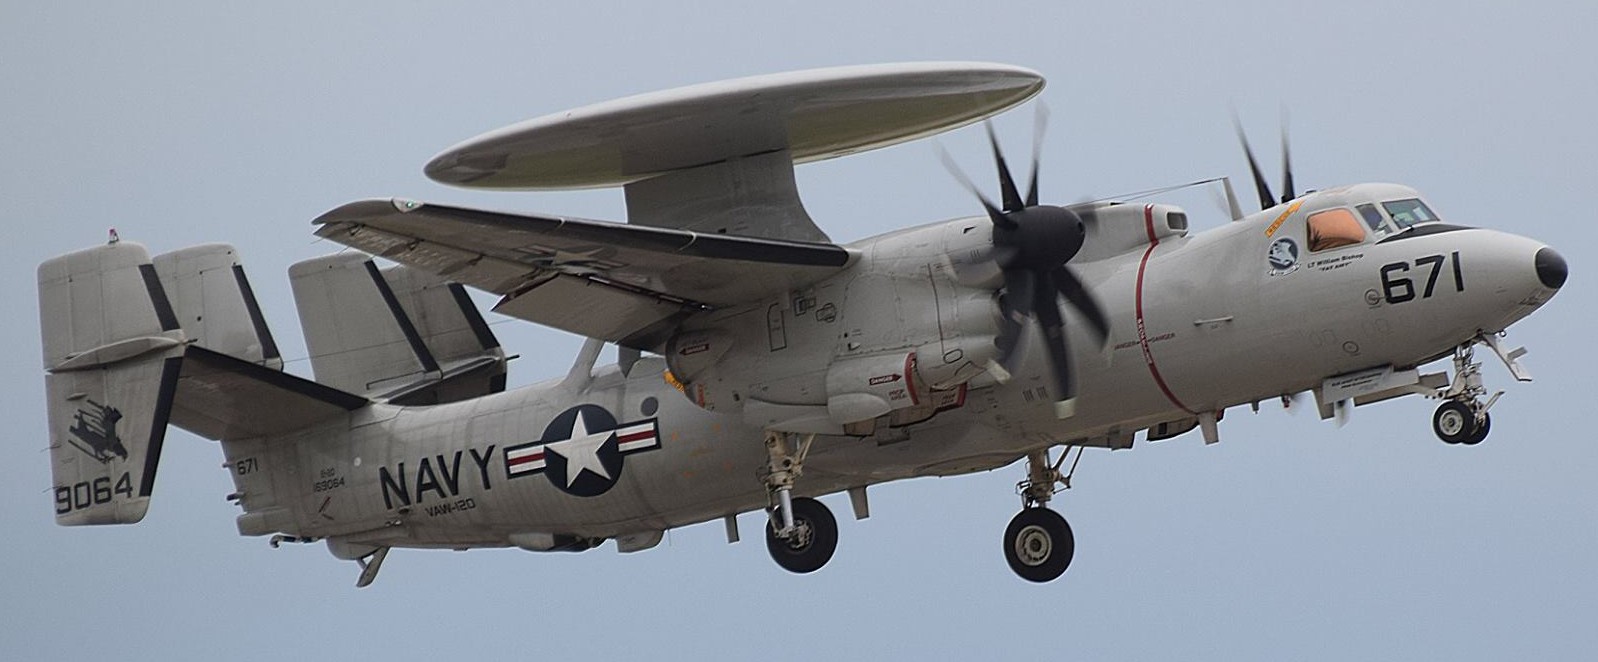 vaw-120 greyhawks airborne command control squadron e-2d advanced hawkeye replacement nas point mugu california 60